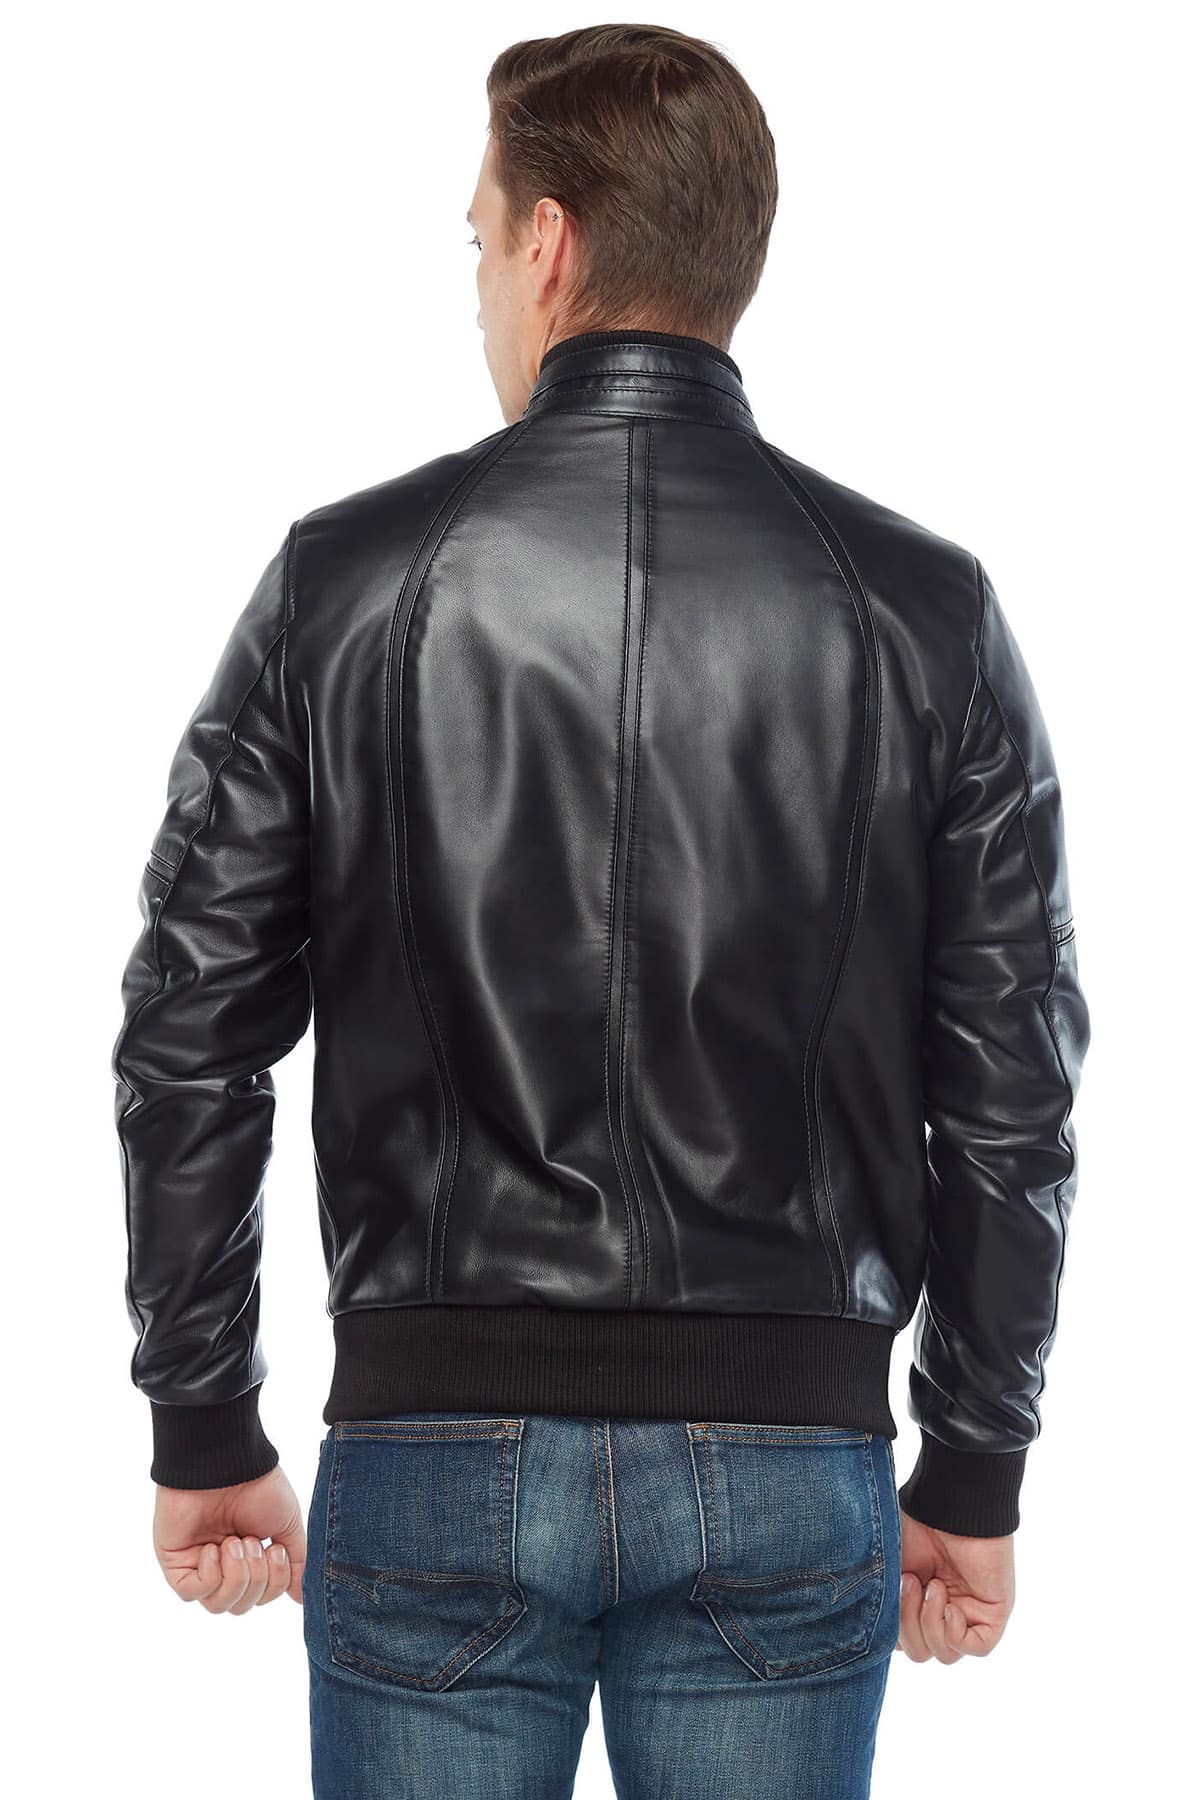 George Craig Black Leather Jacket Back